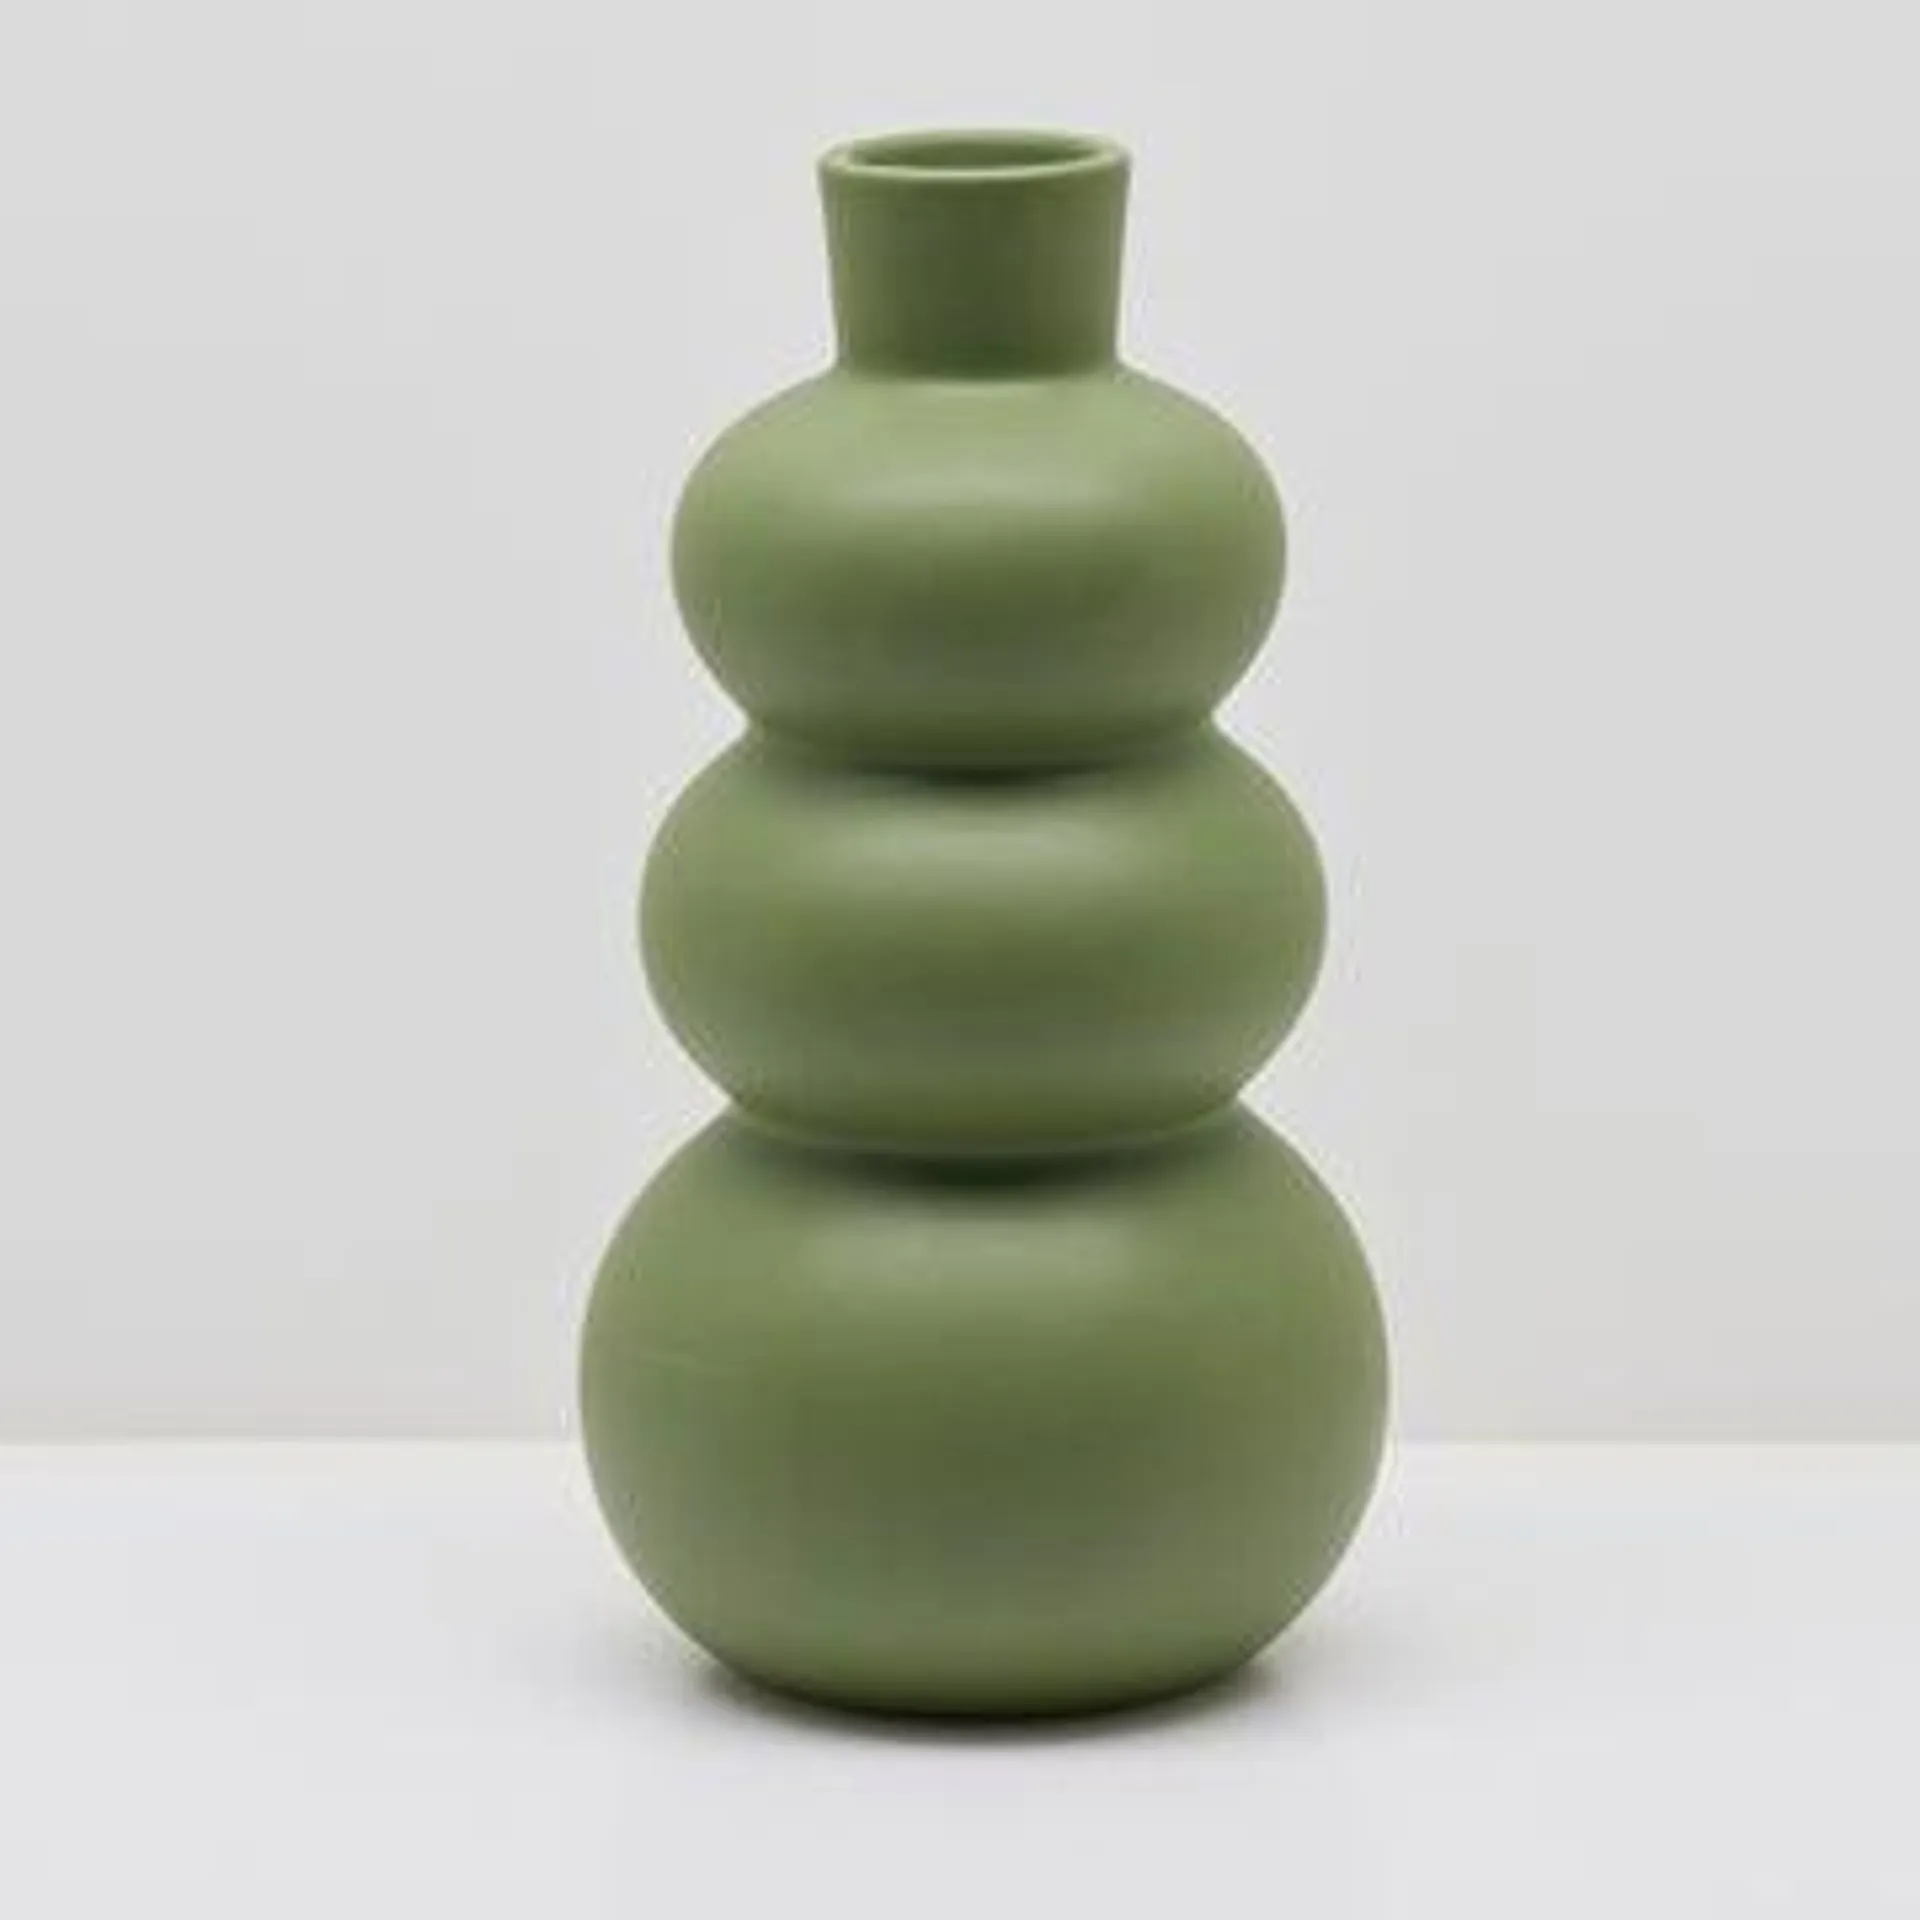 Calabash Vase - Laurel Green - Tall